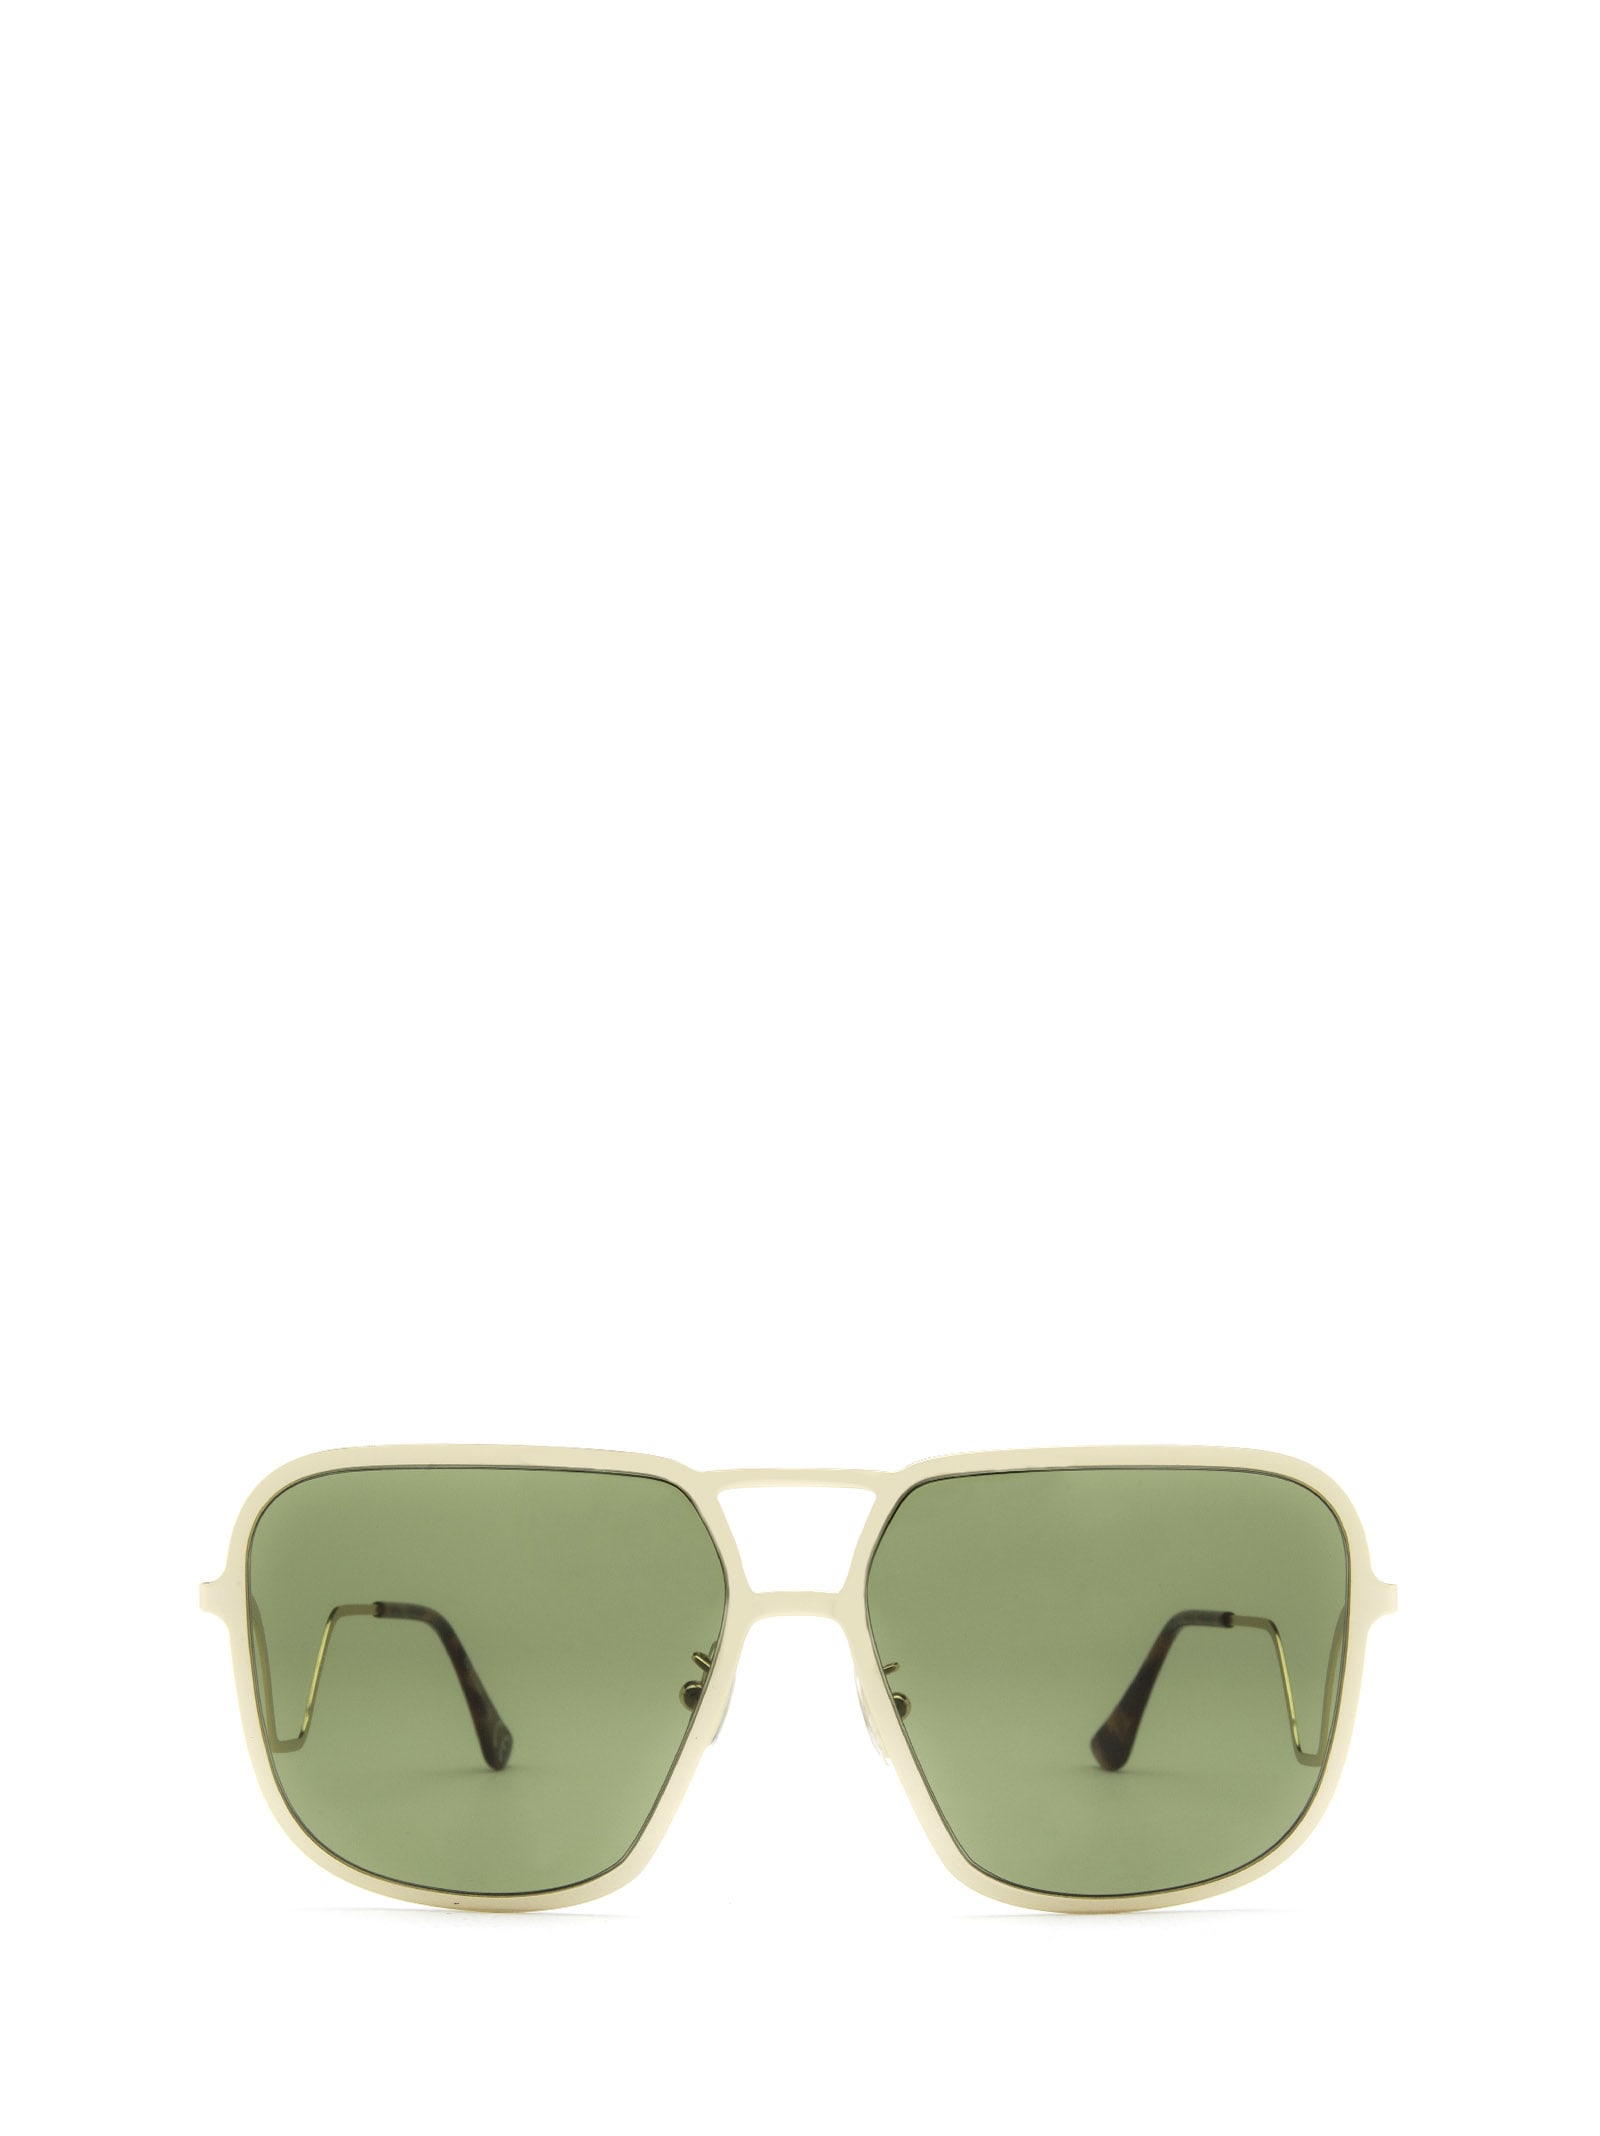 Ha Long Bay Green Sunglasses